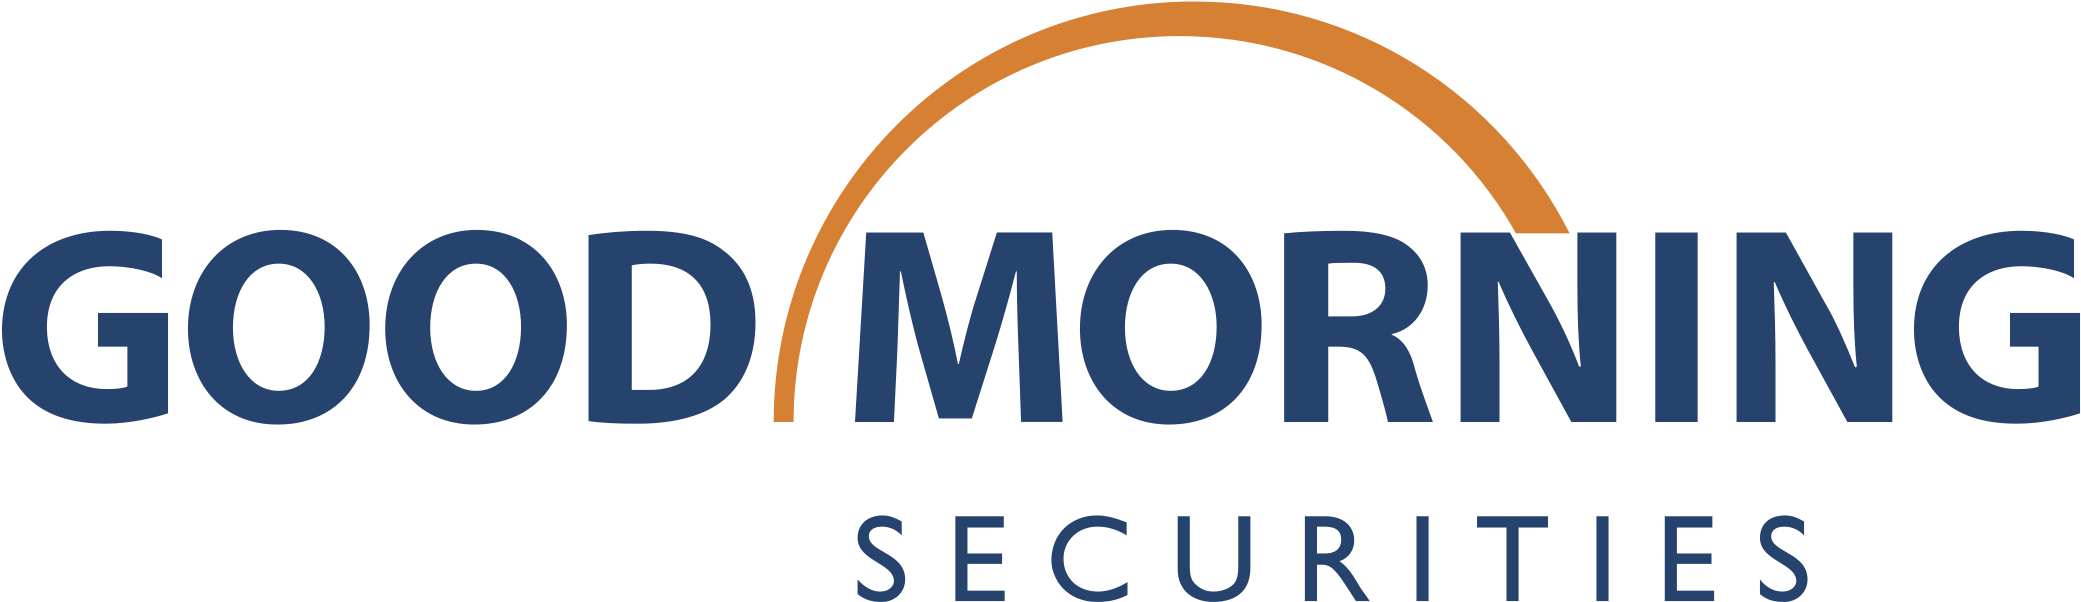 Good Morning Securities Logo Png Transparent - Good Morning Clipart (2400x2400), Png Download